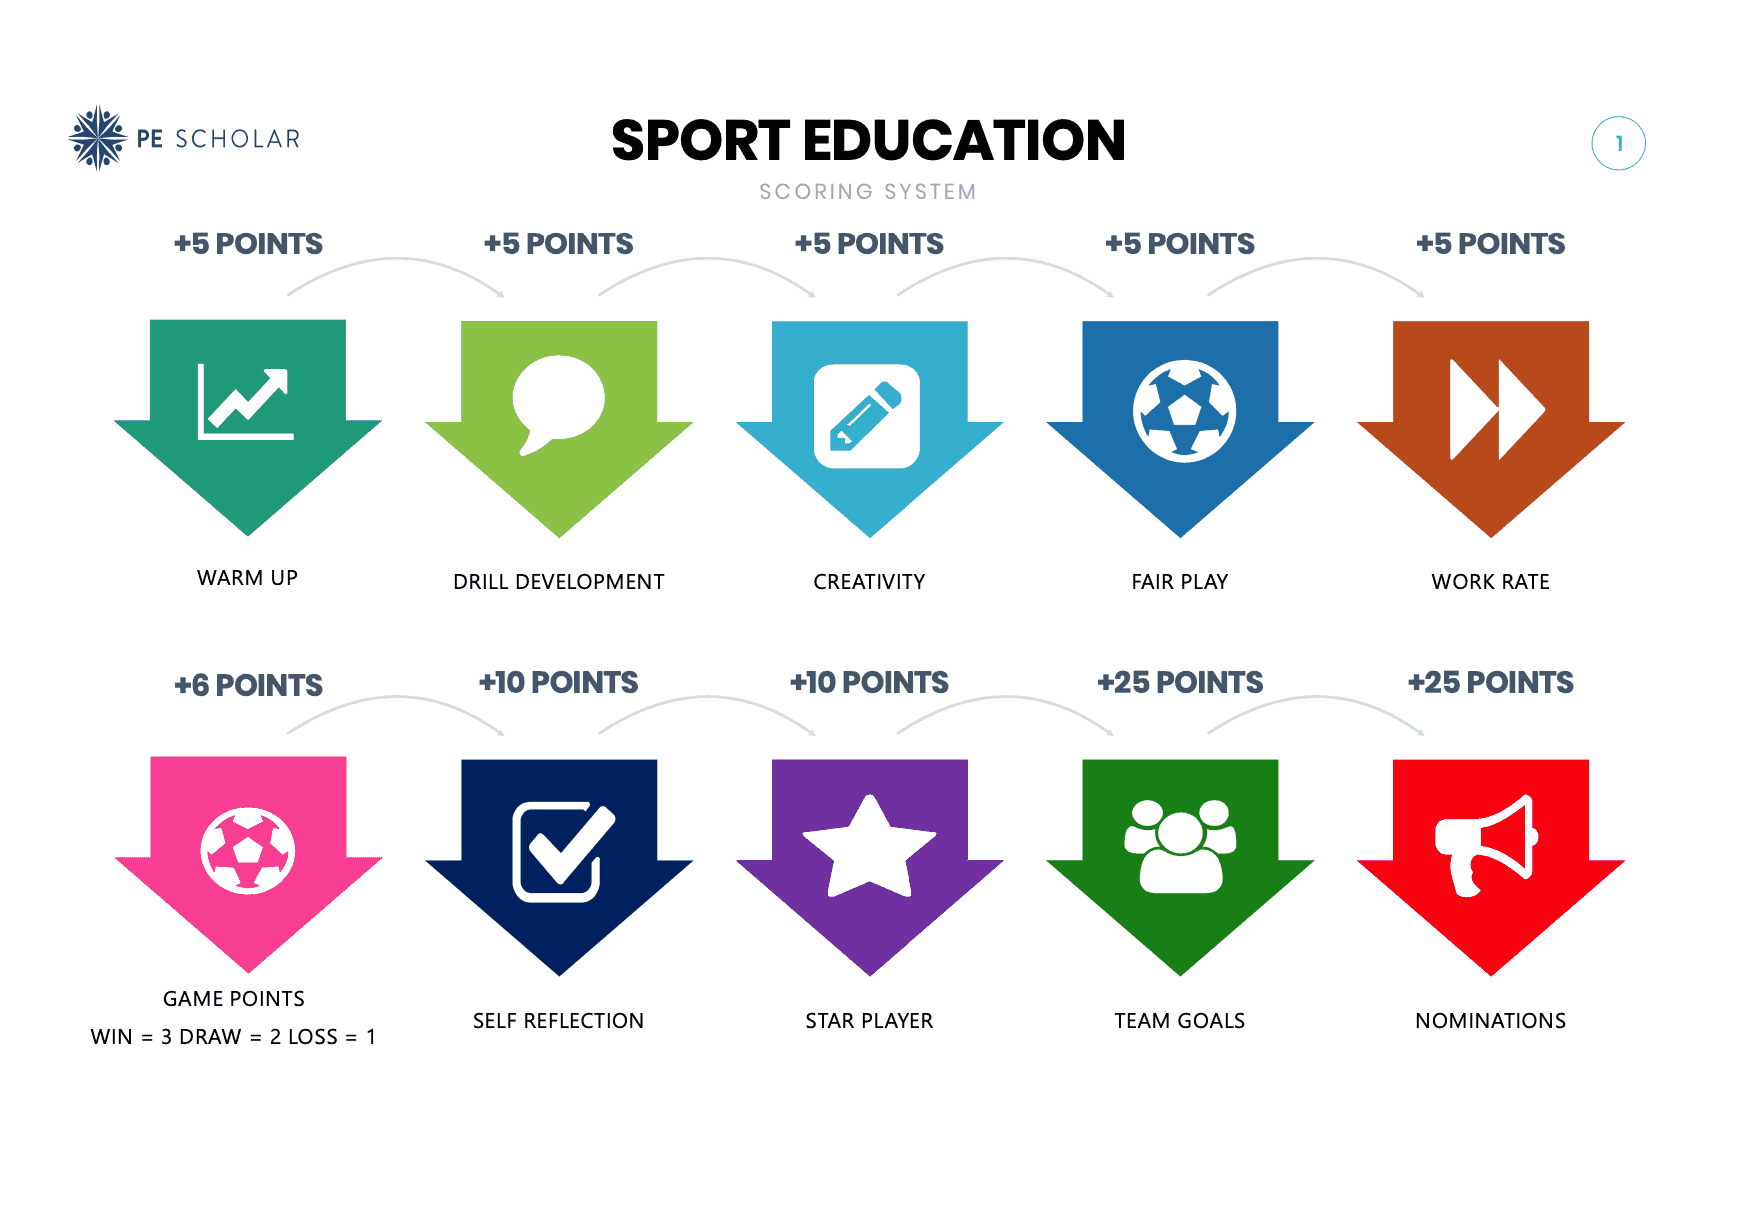 Sport Education Scoring System